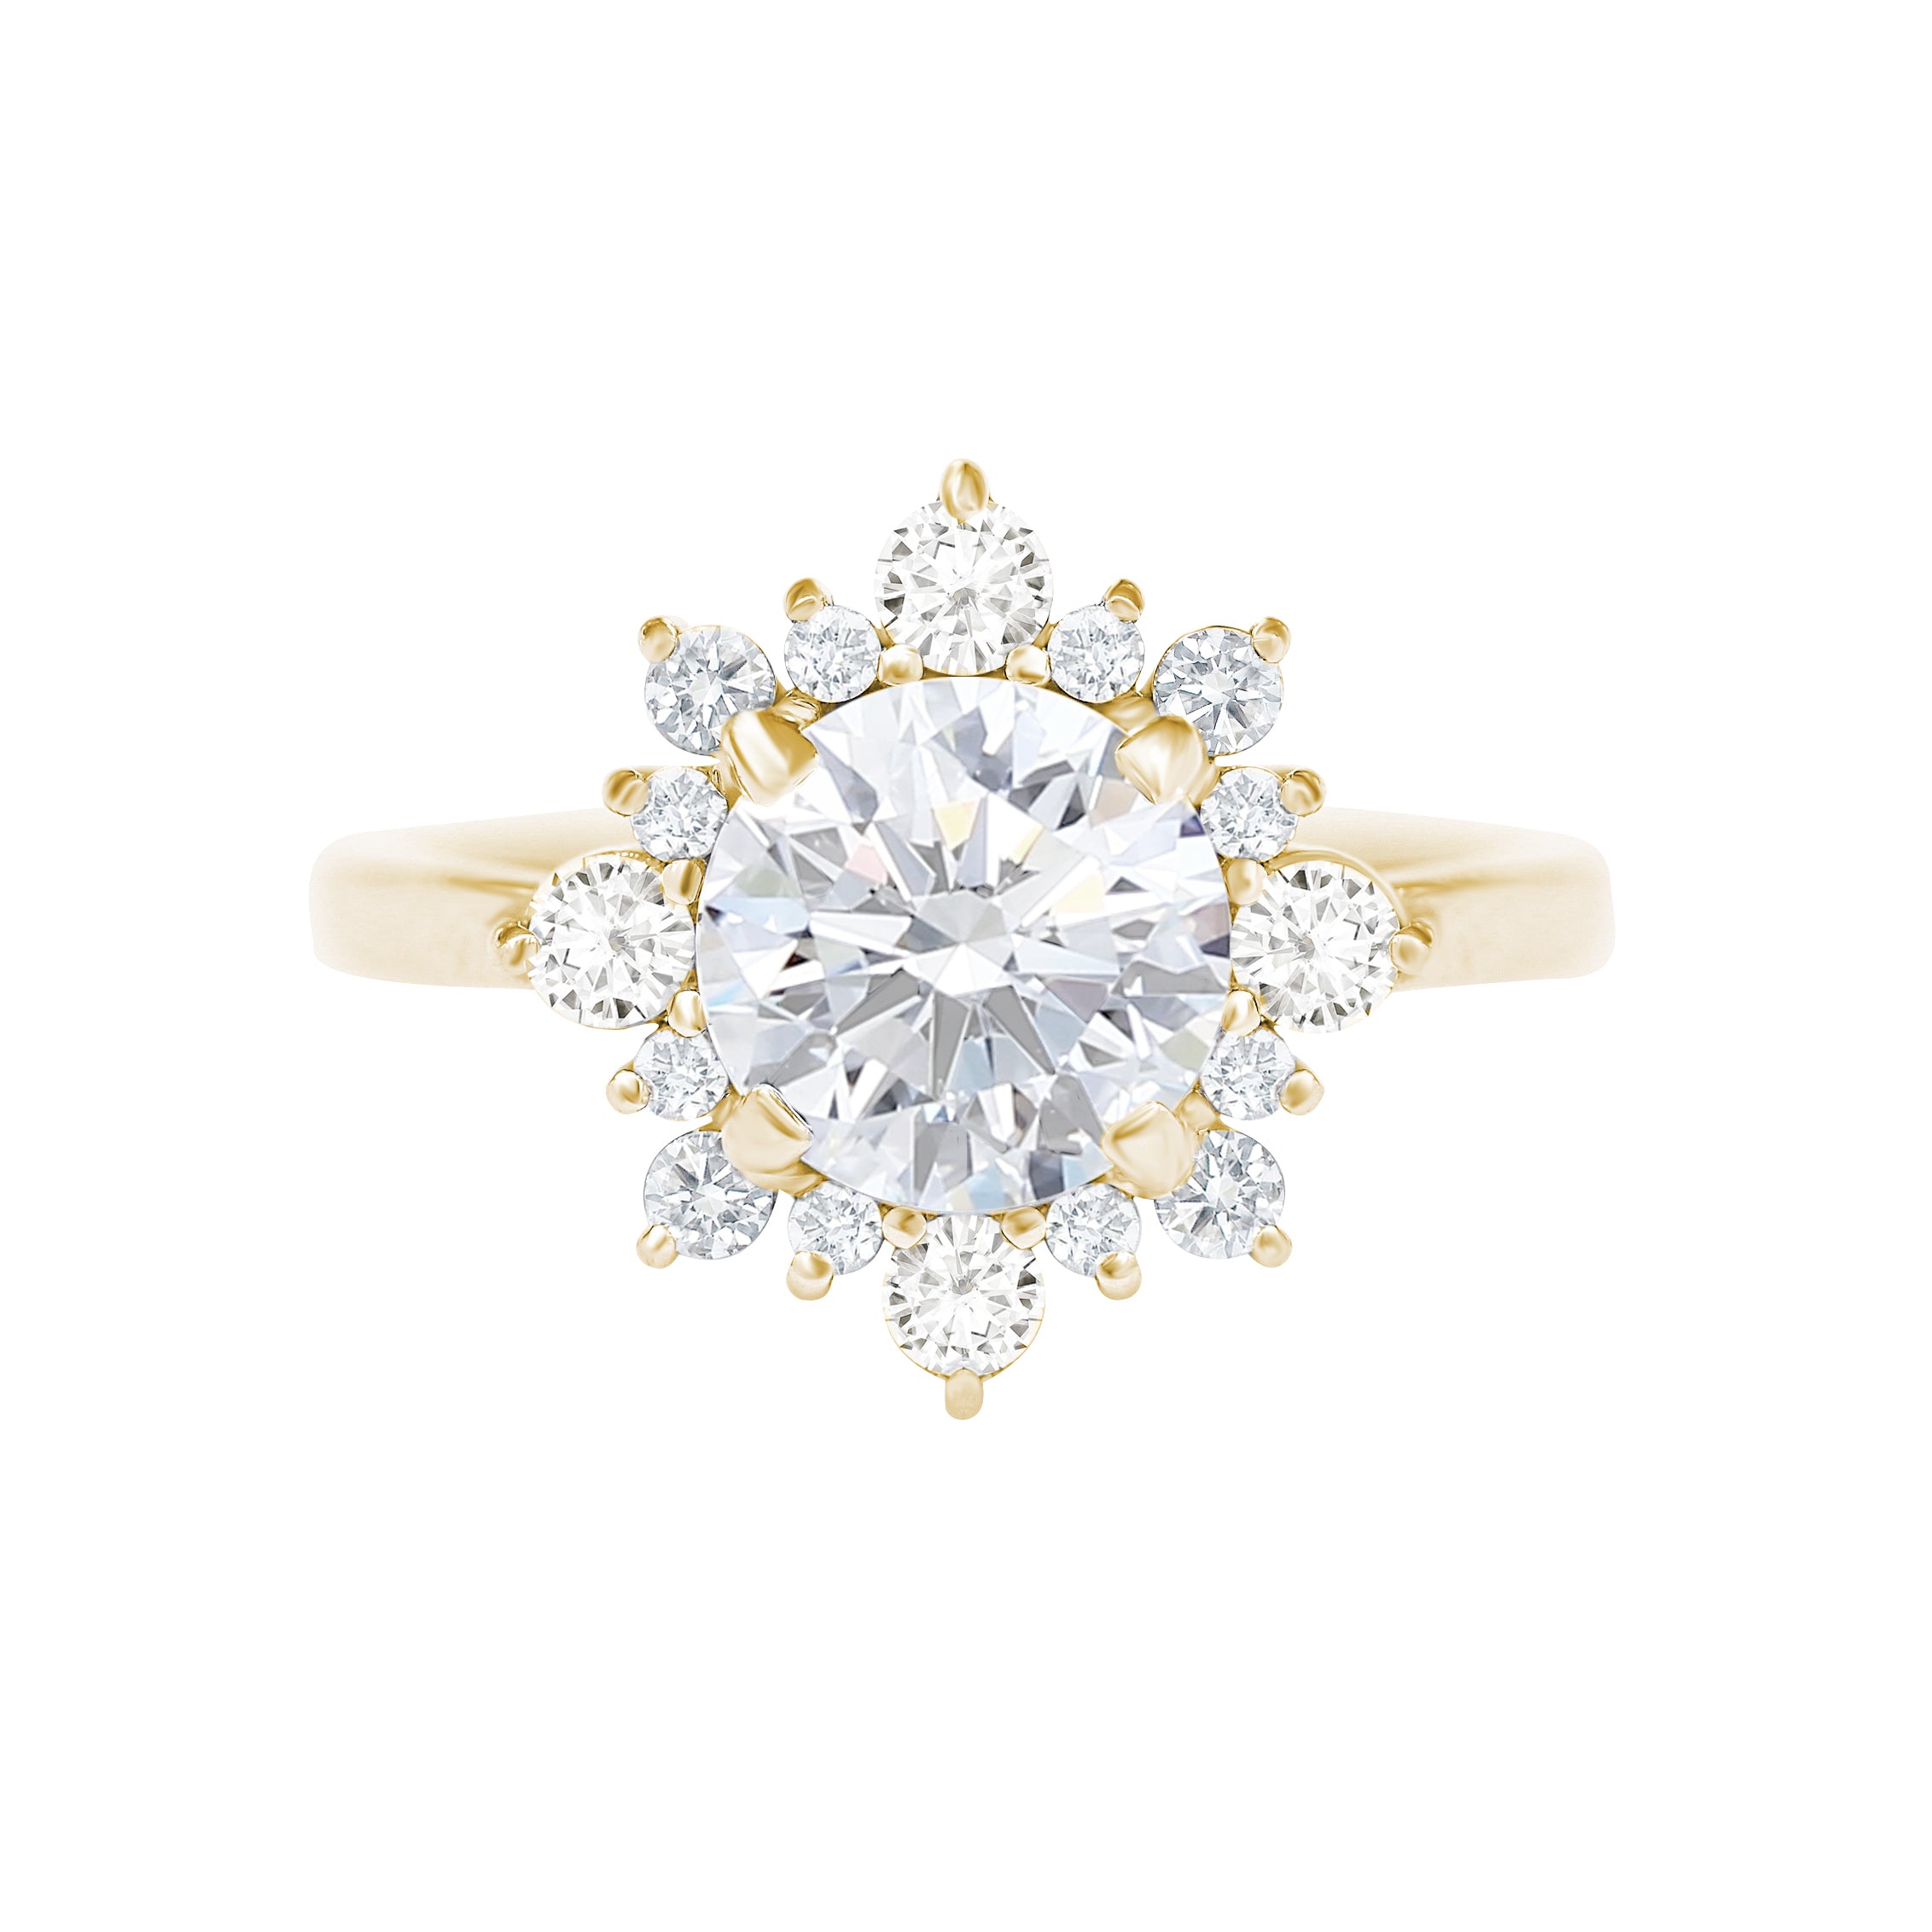 Round diamond halo unique engagement ring, "Snowflake"